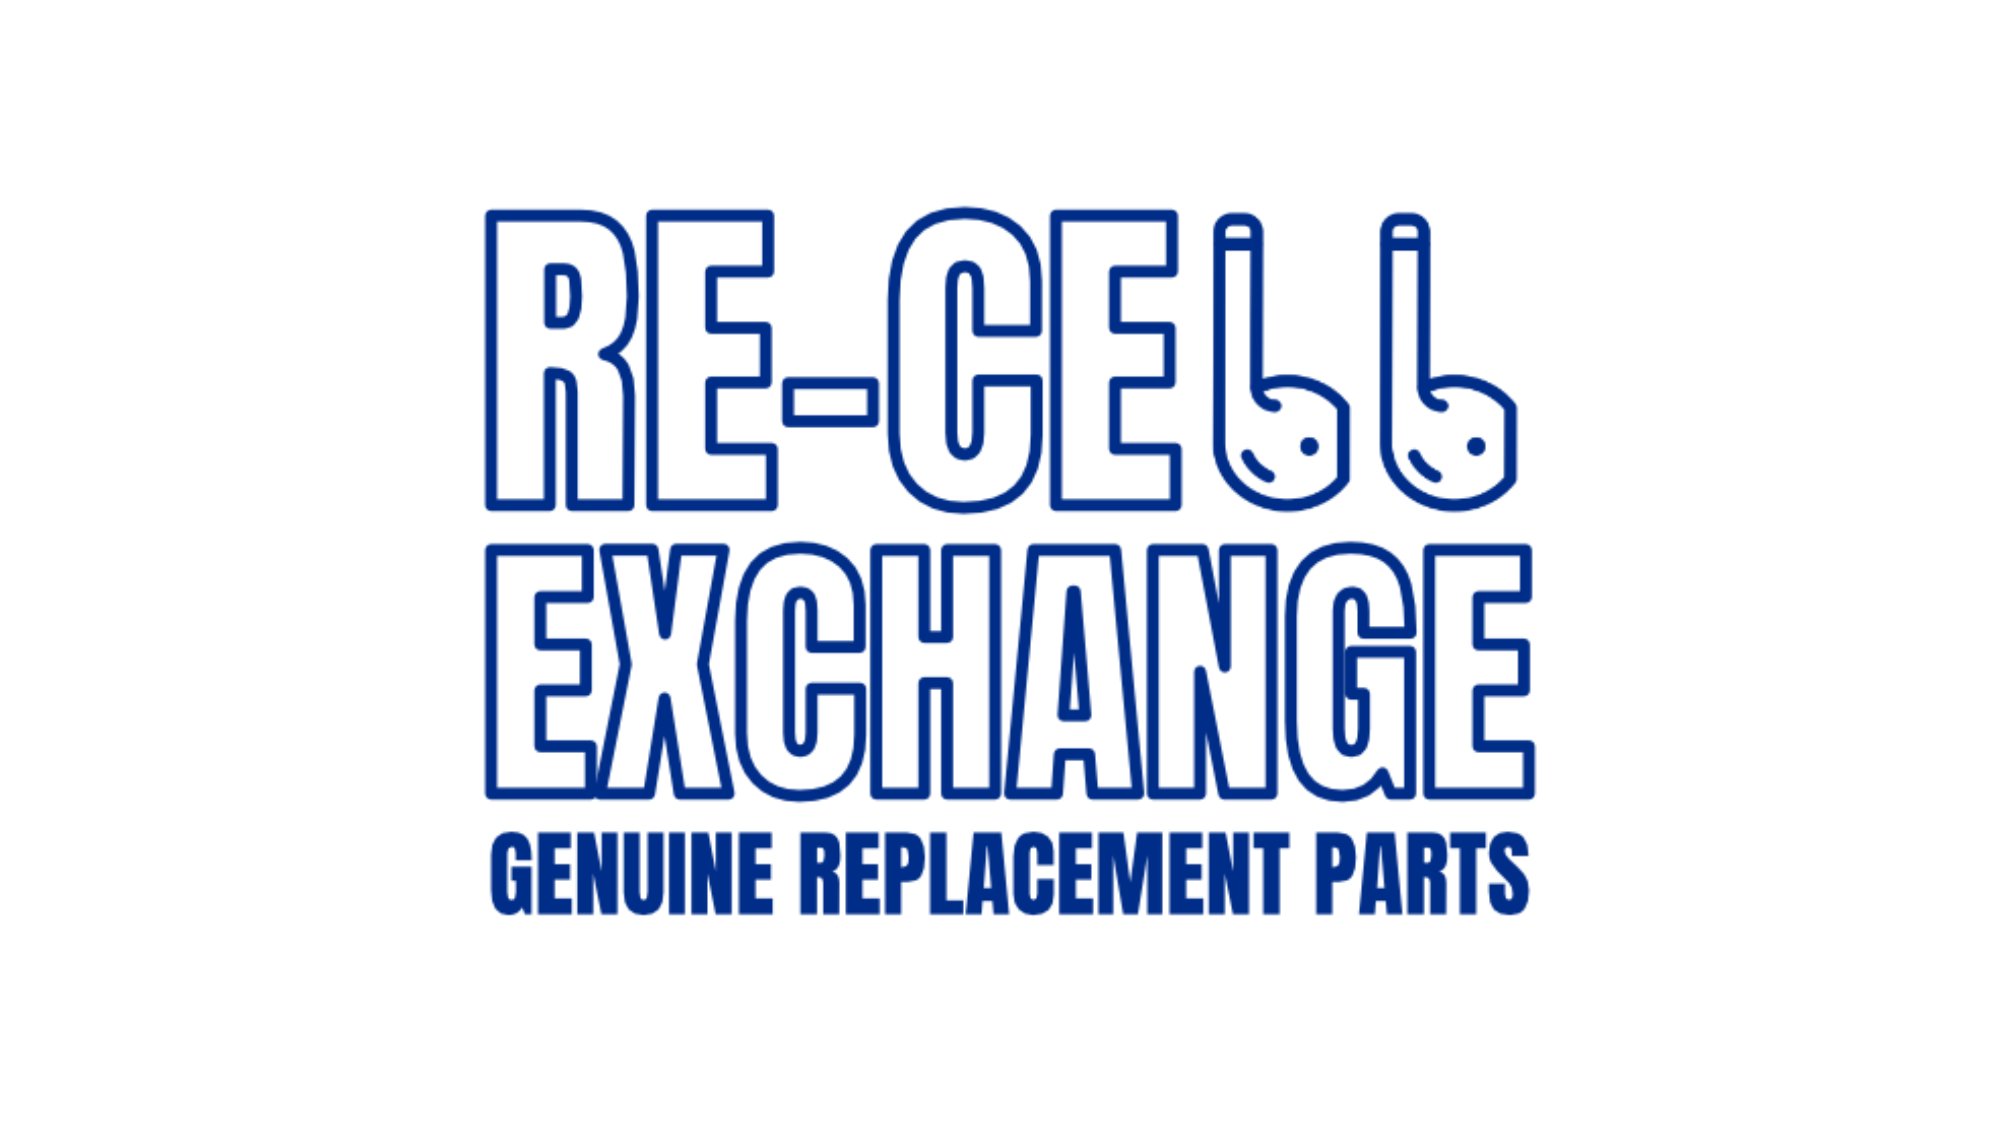 Recell Exchange logo